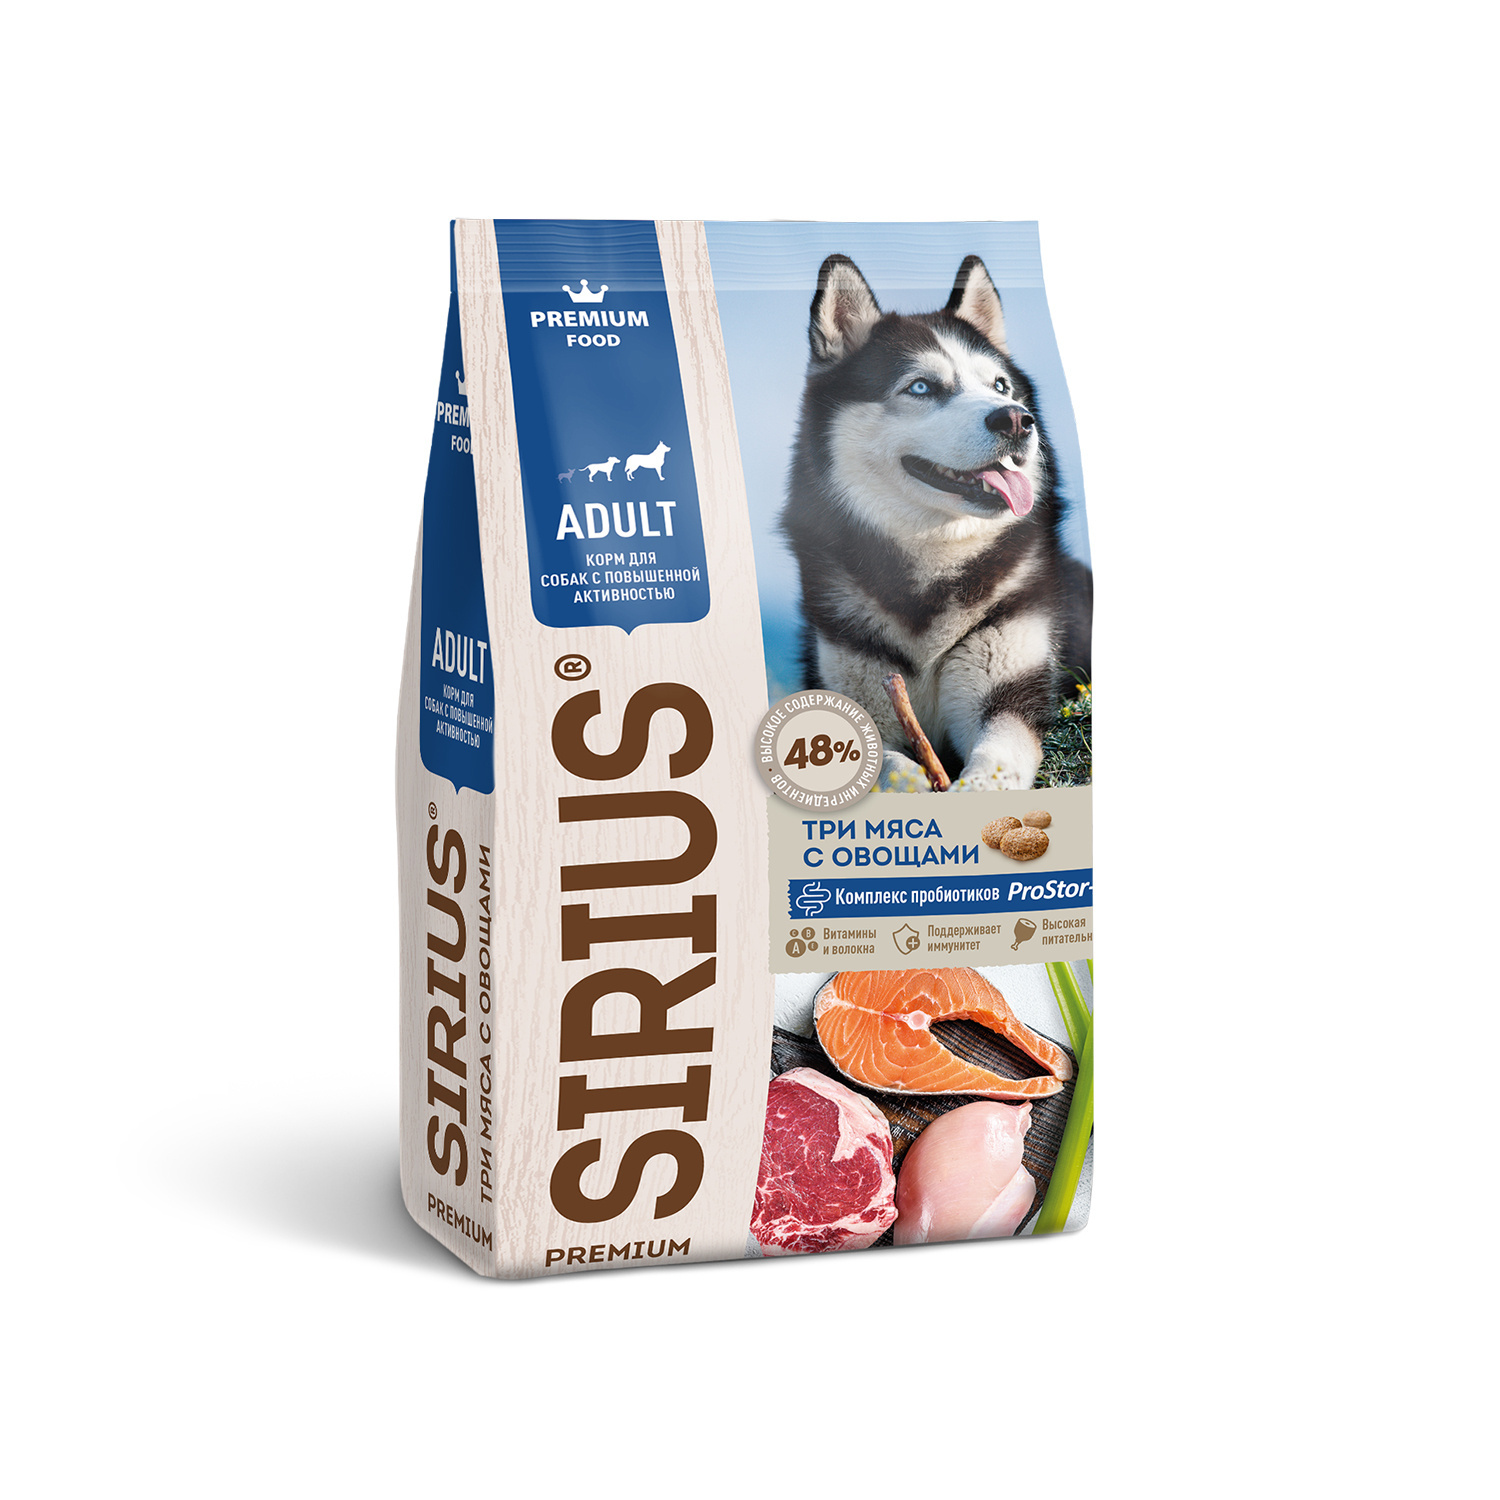 Sirius Sirius сухой корм для собак с повышенной активностью, три мяса с овощами (2 кг) три мяса с овощами сухой корм премиум класса sirius для собак с повышенной активностью 20 кг